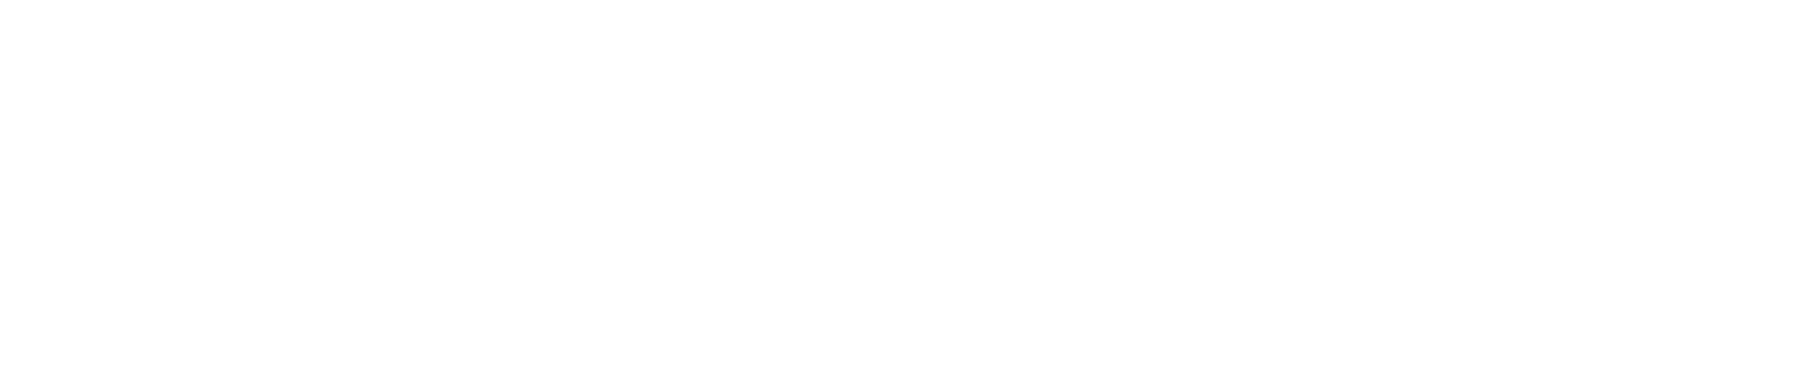 Butterfly Network Logo groß für dunkle Hintergründe (transparentes PNG)